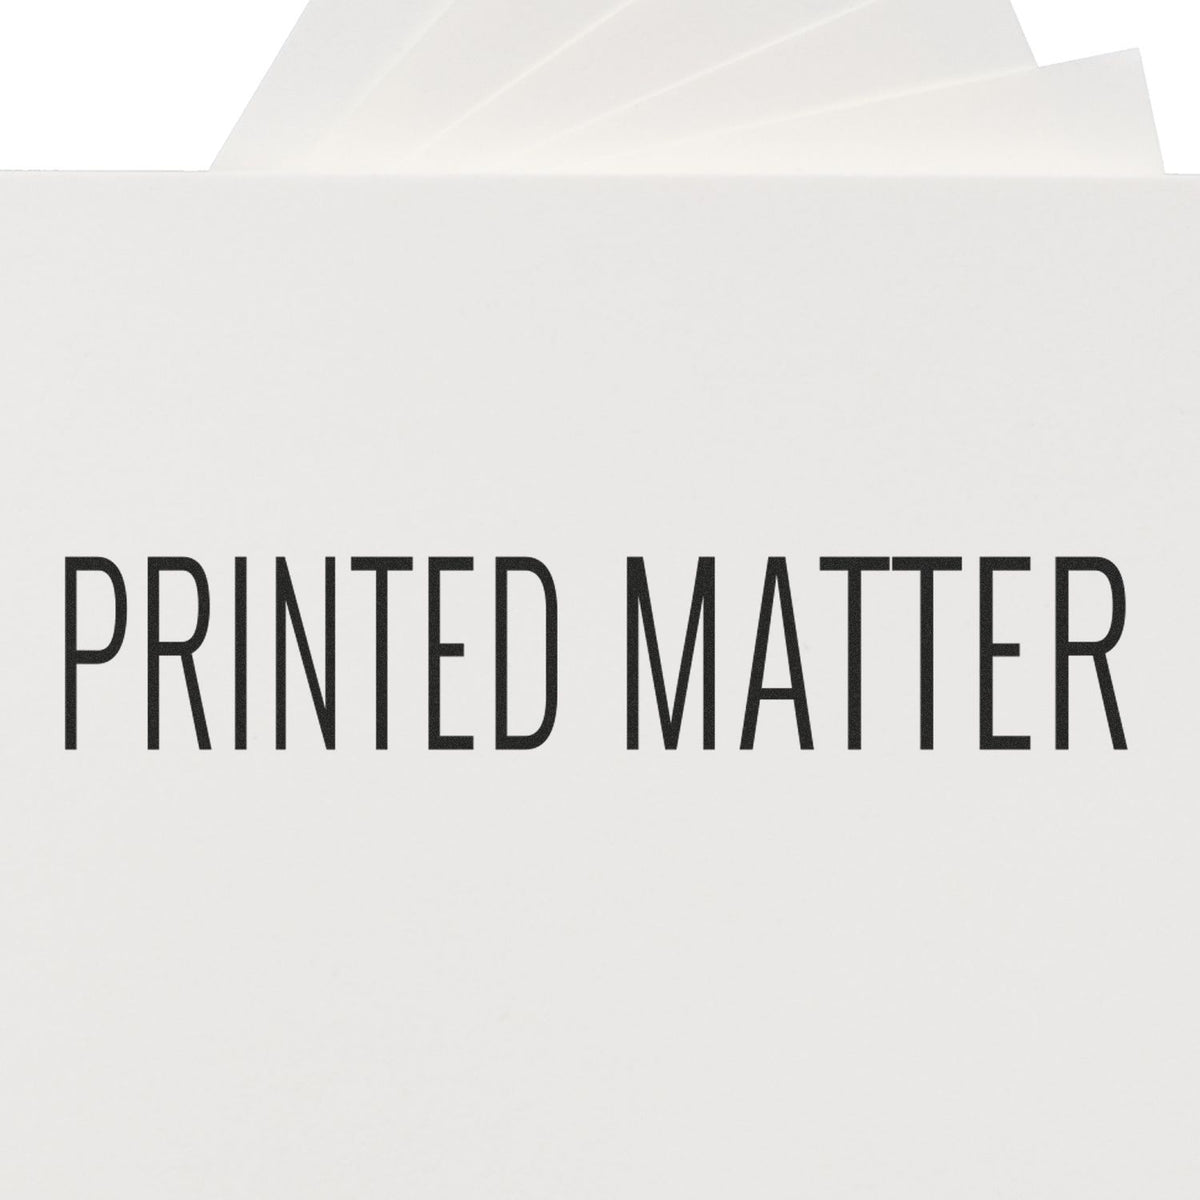 Large Self-Inking Printed Matter Stamp Lifestyle Photo